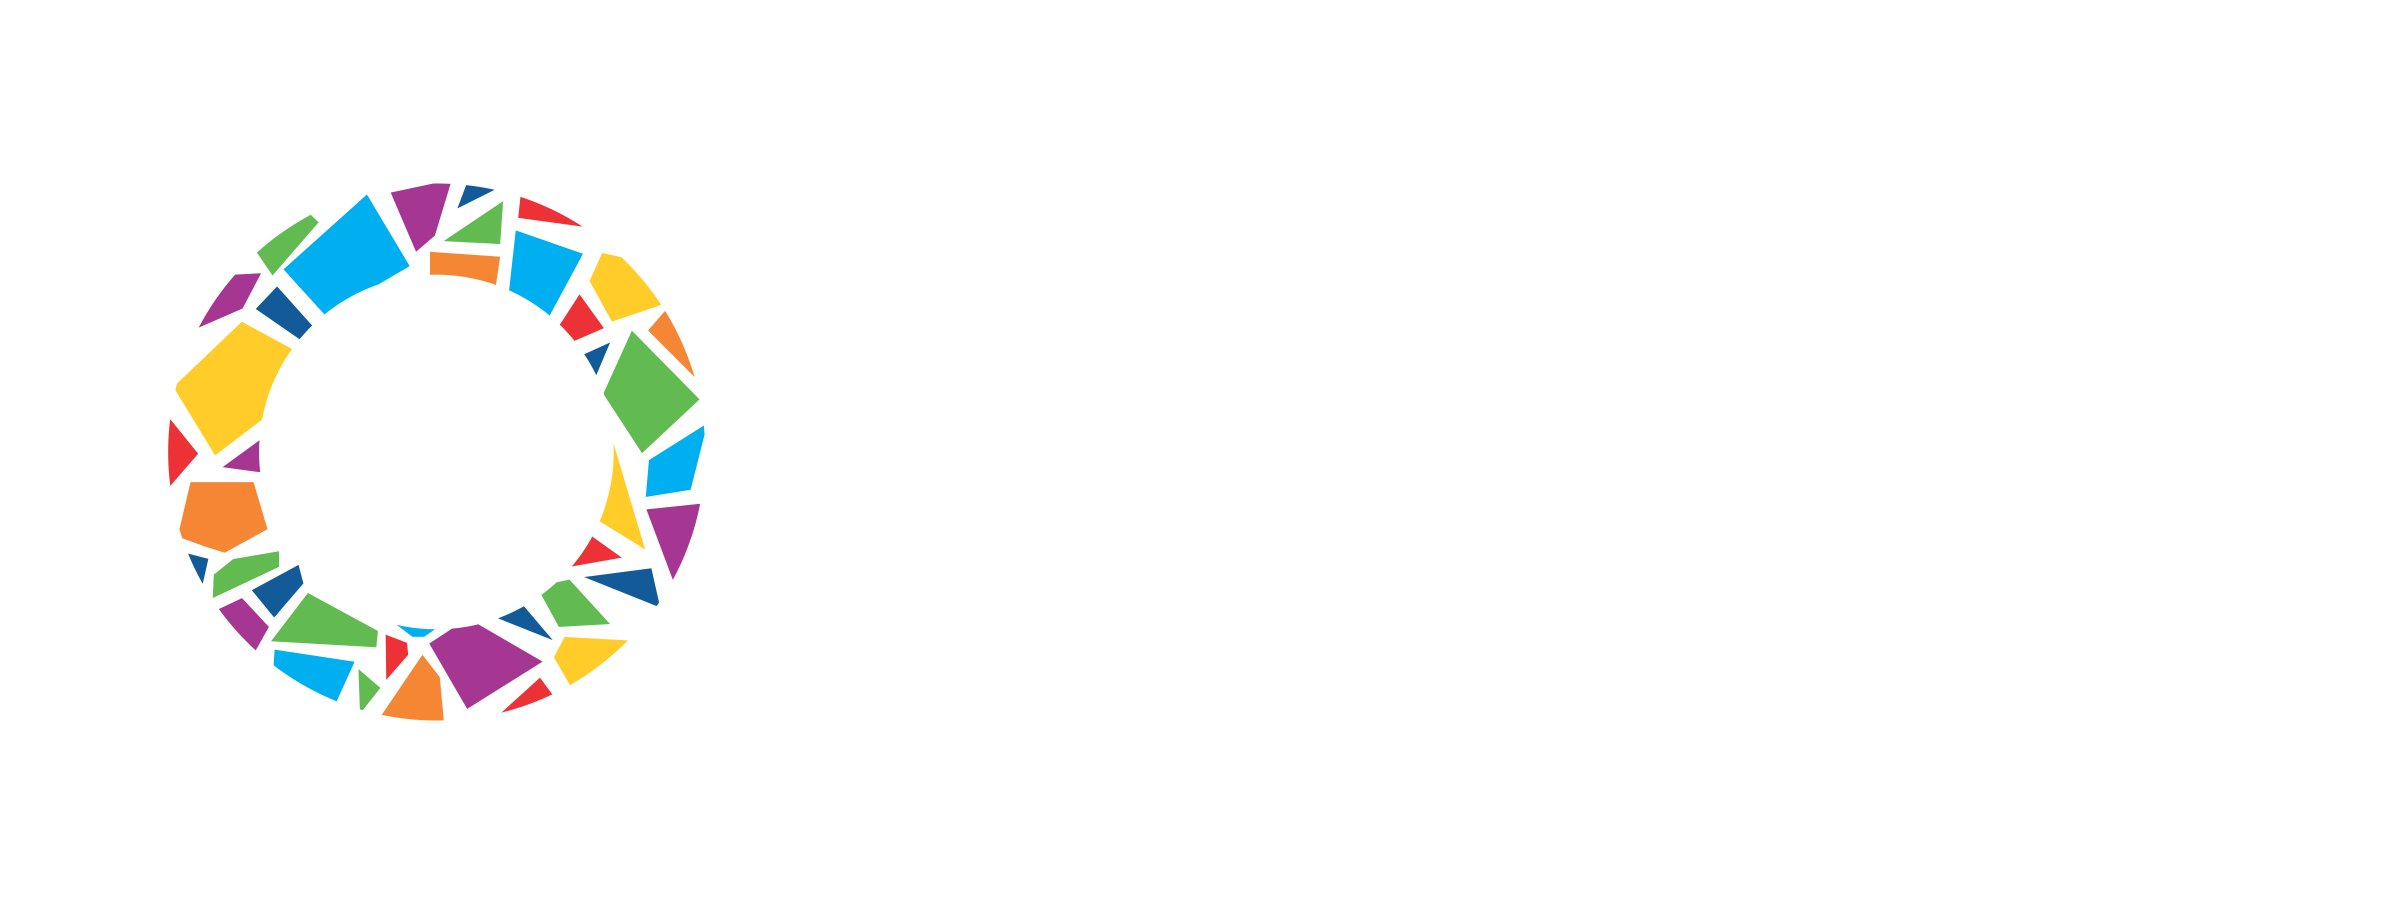 Alex Masu's Photography